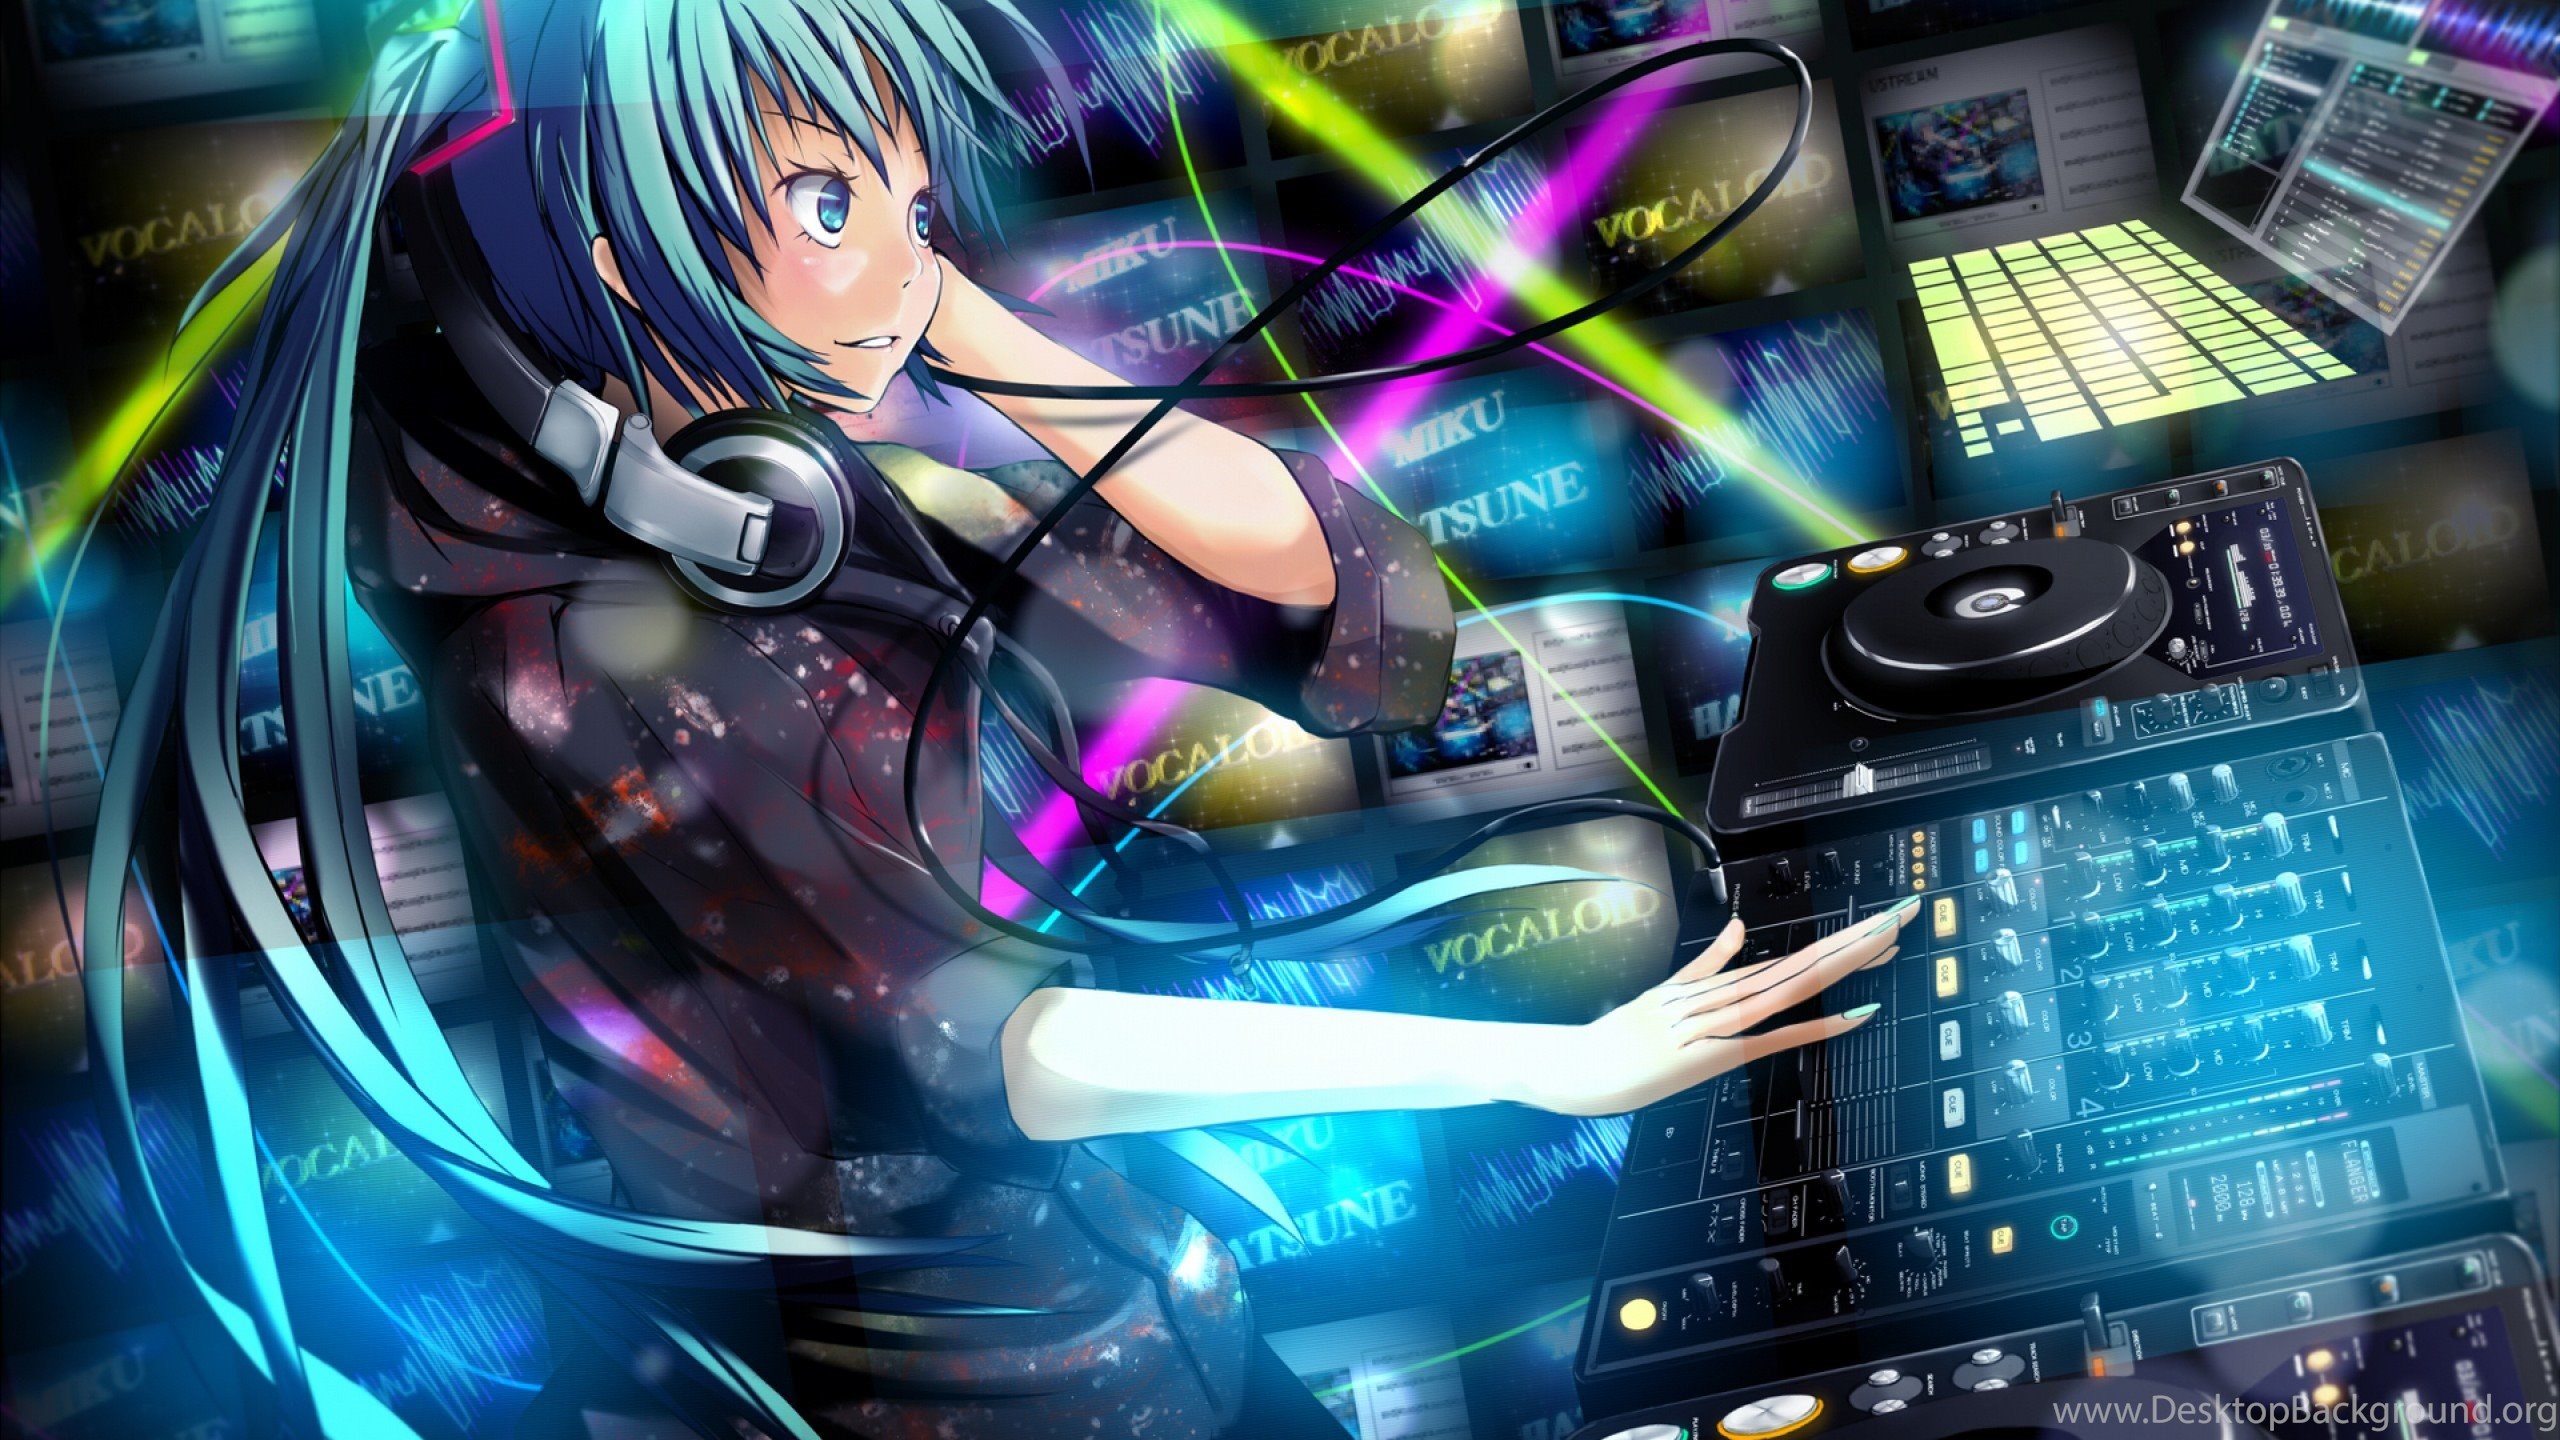 Nightcore Anime Wallpapers Image Desktop Backgrounds.